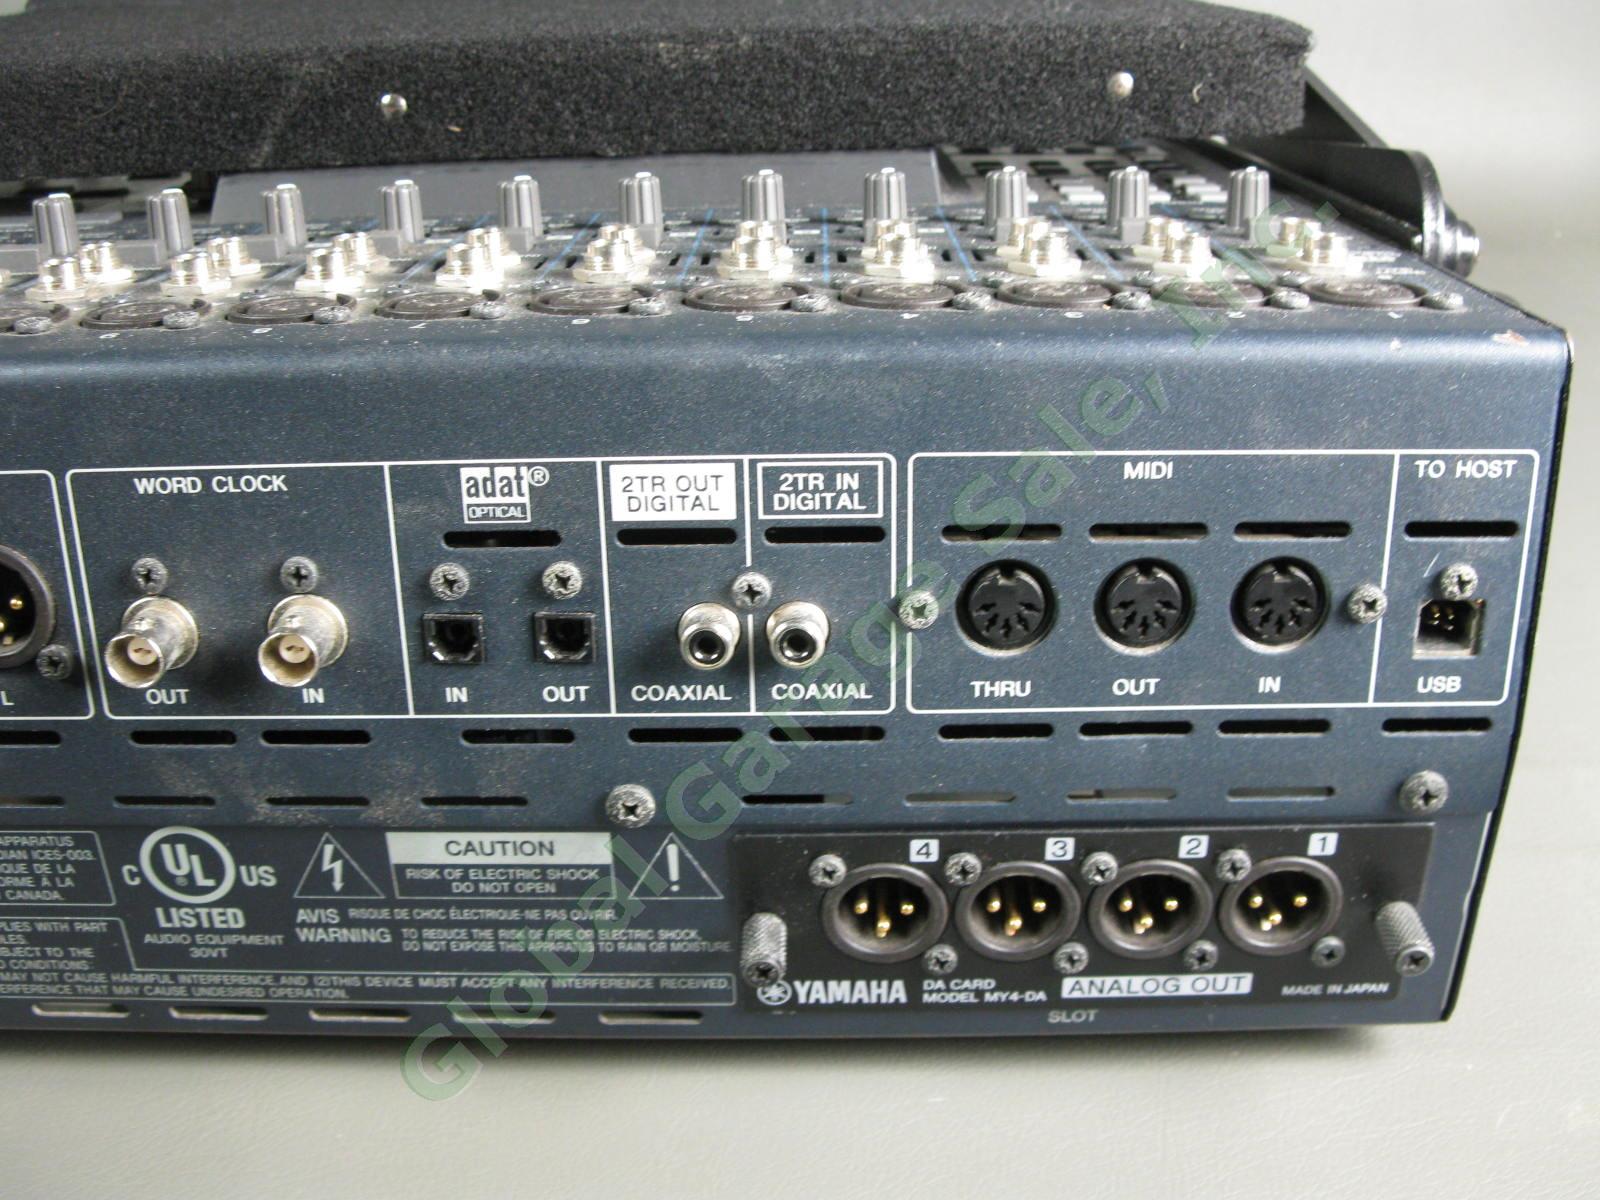 Yamaha 01V96 Digital Live Studio Mixing Console Mixer w/Gator Road Case & Manual 7